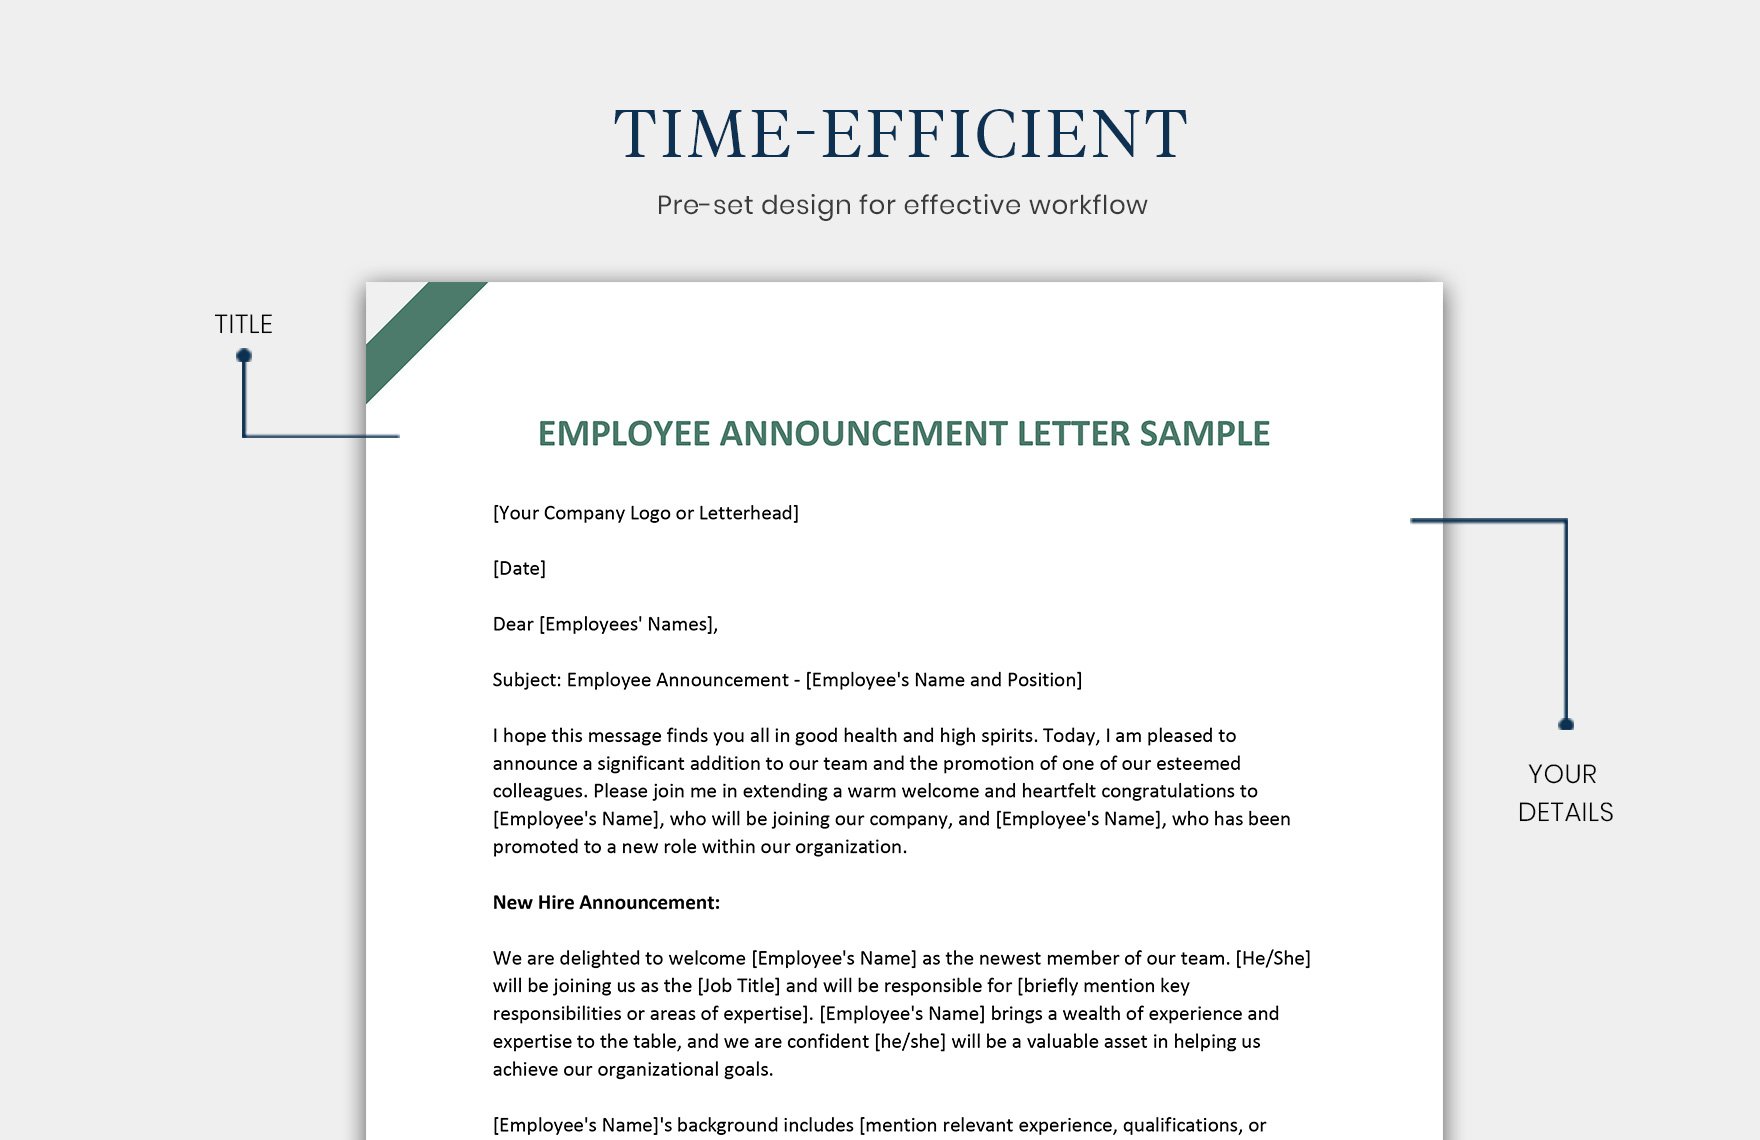 Employee Announcement Letter Sample